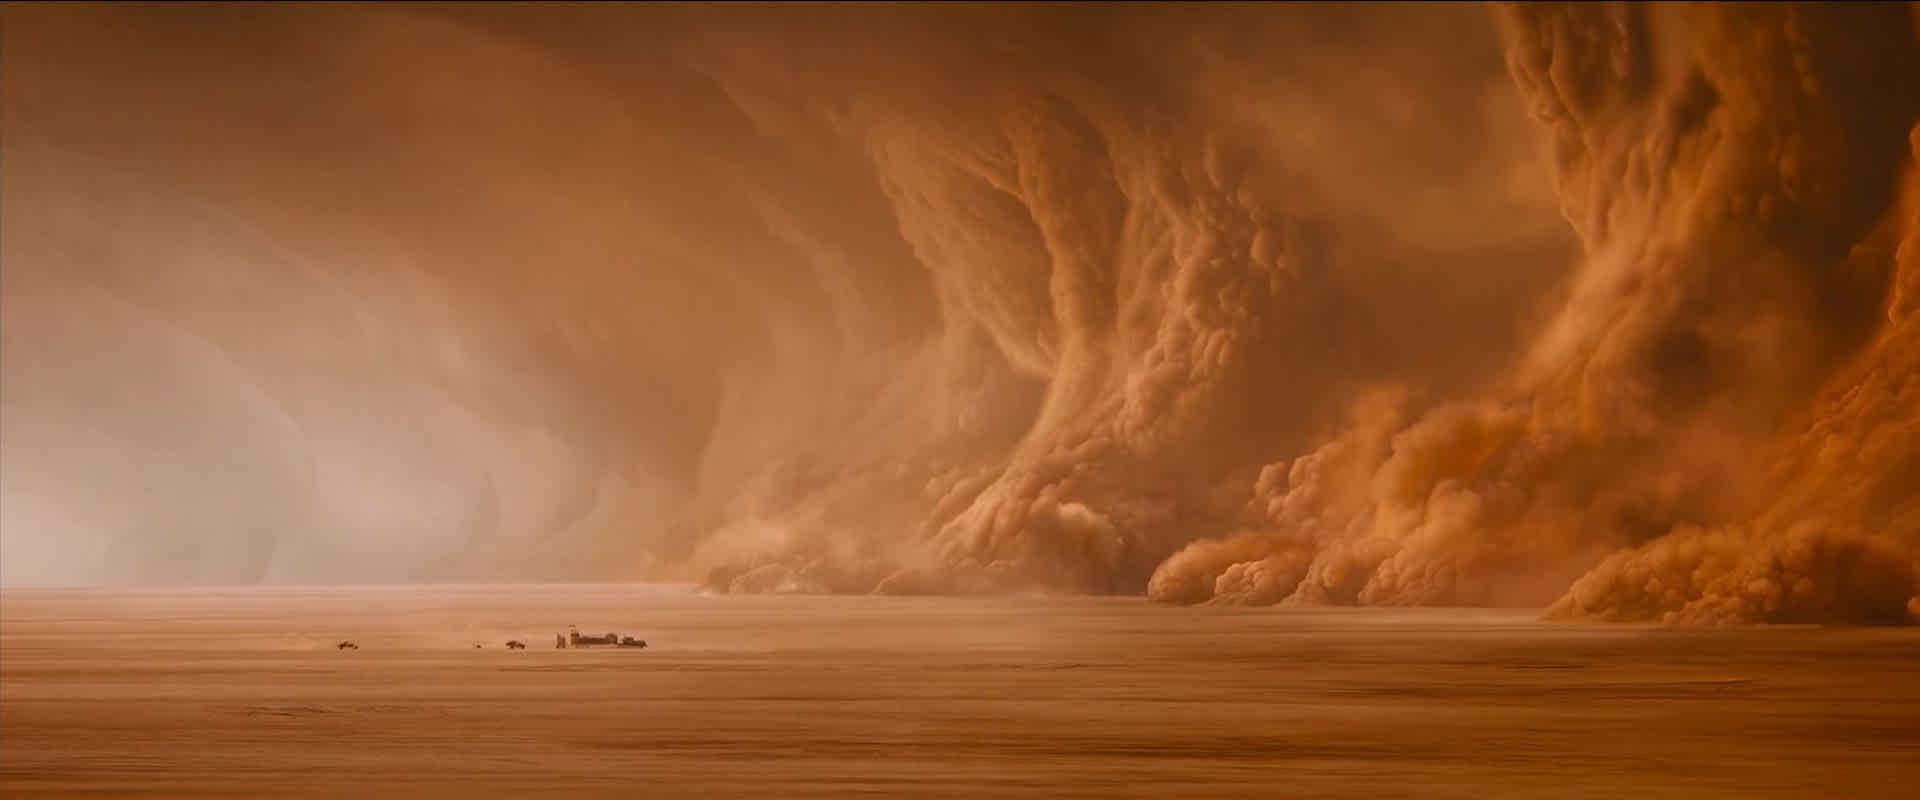 Campo Lunghissimo: Frame del film Mad Max Fury Road